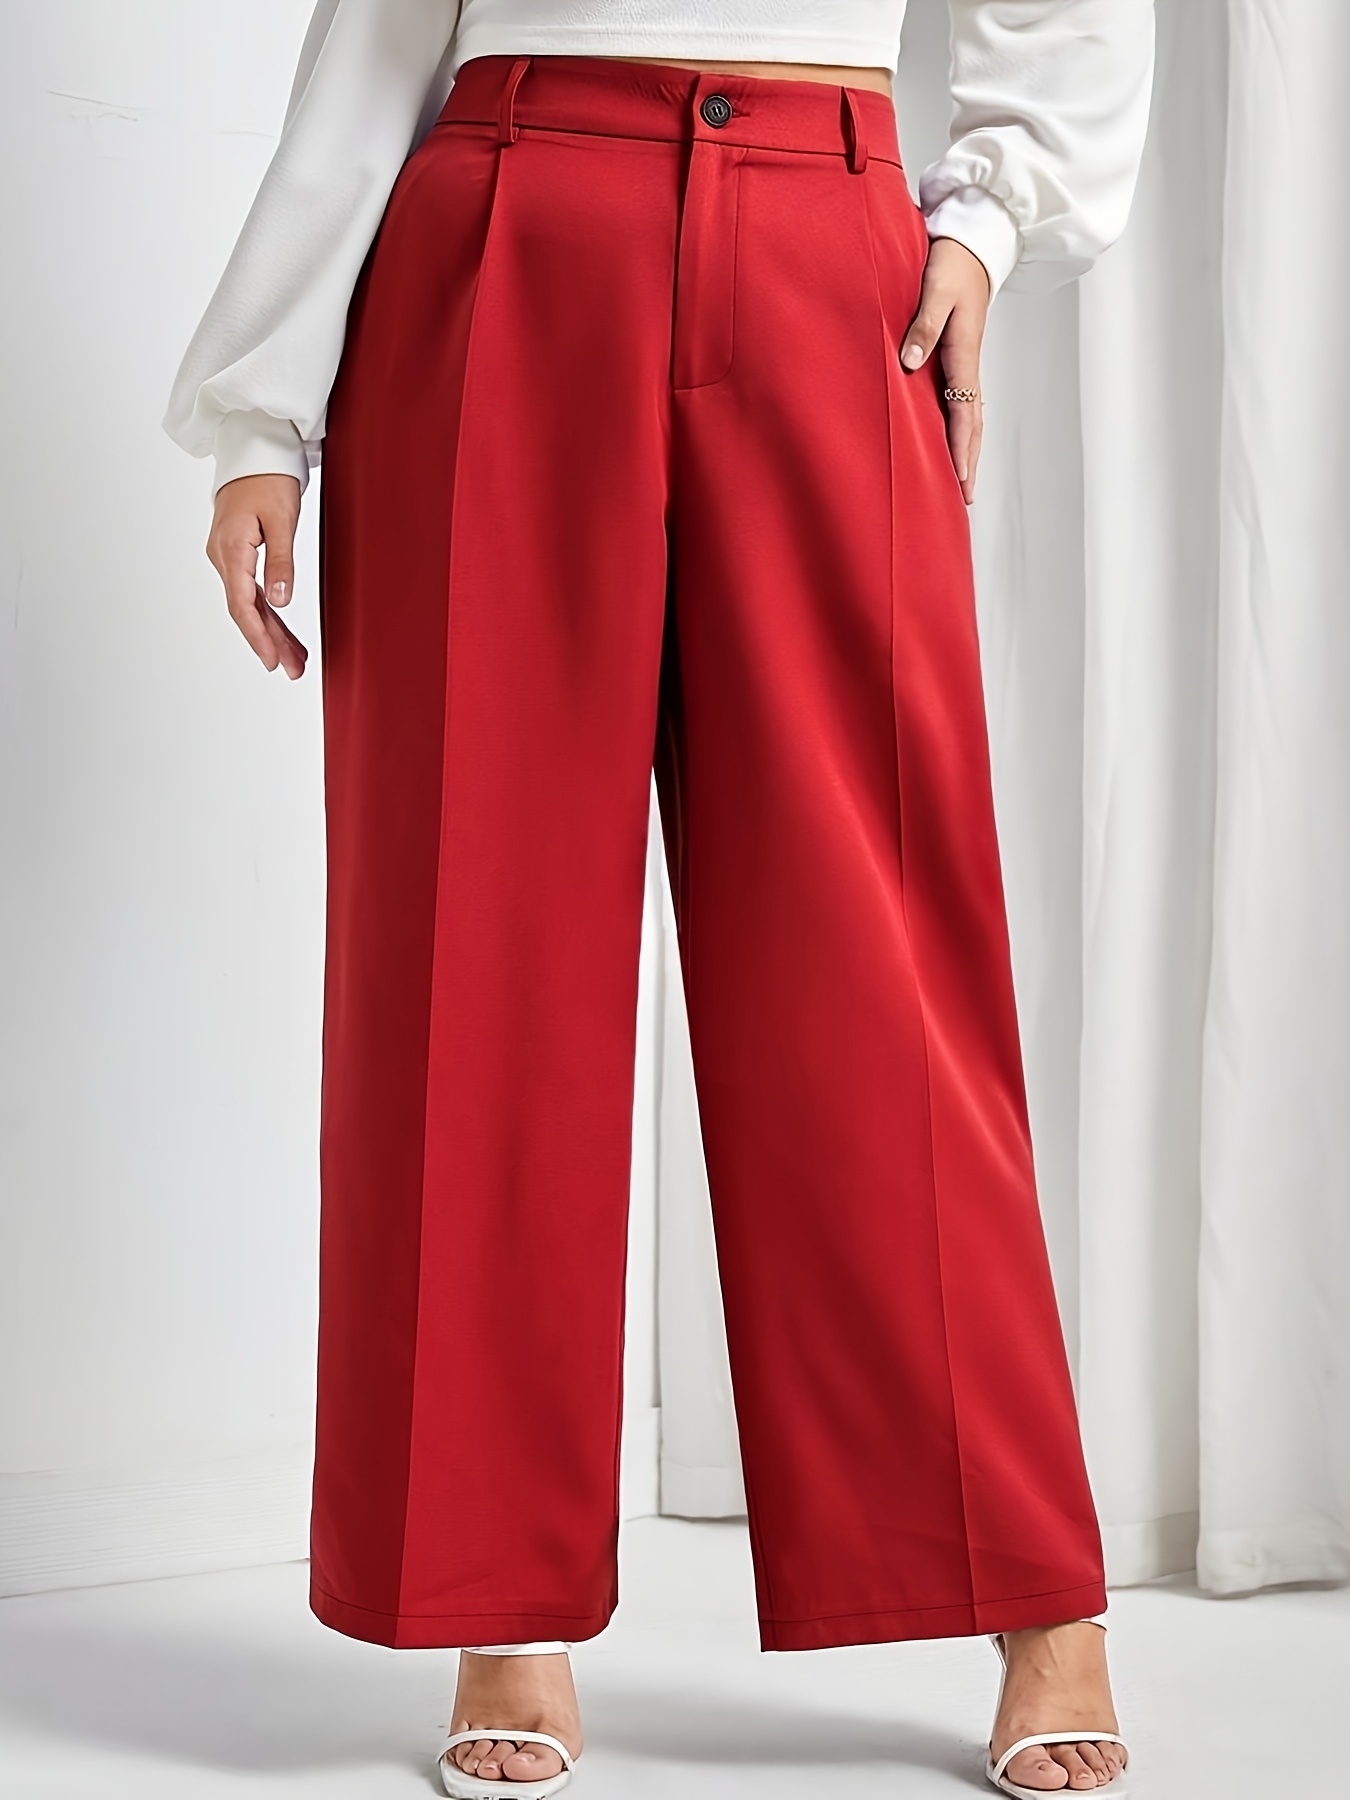 Plus Size Business Casual Pants, Women's Plus Solid Plicated